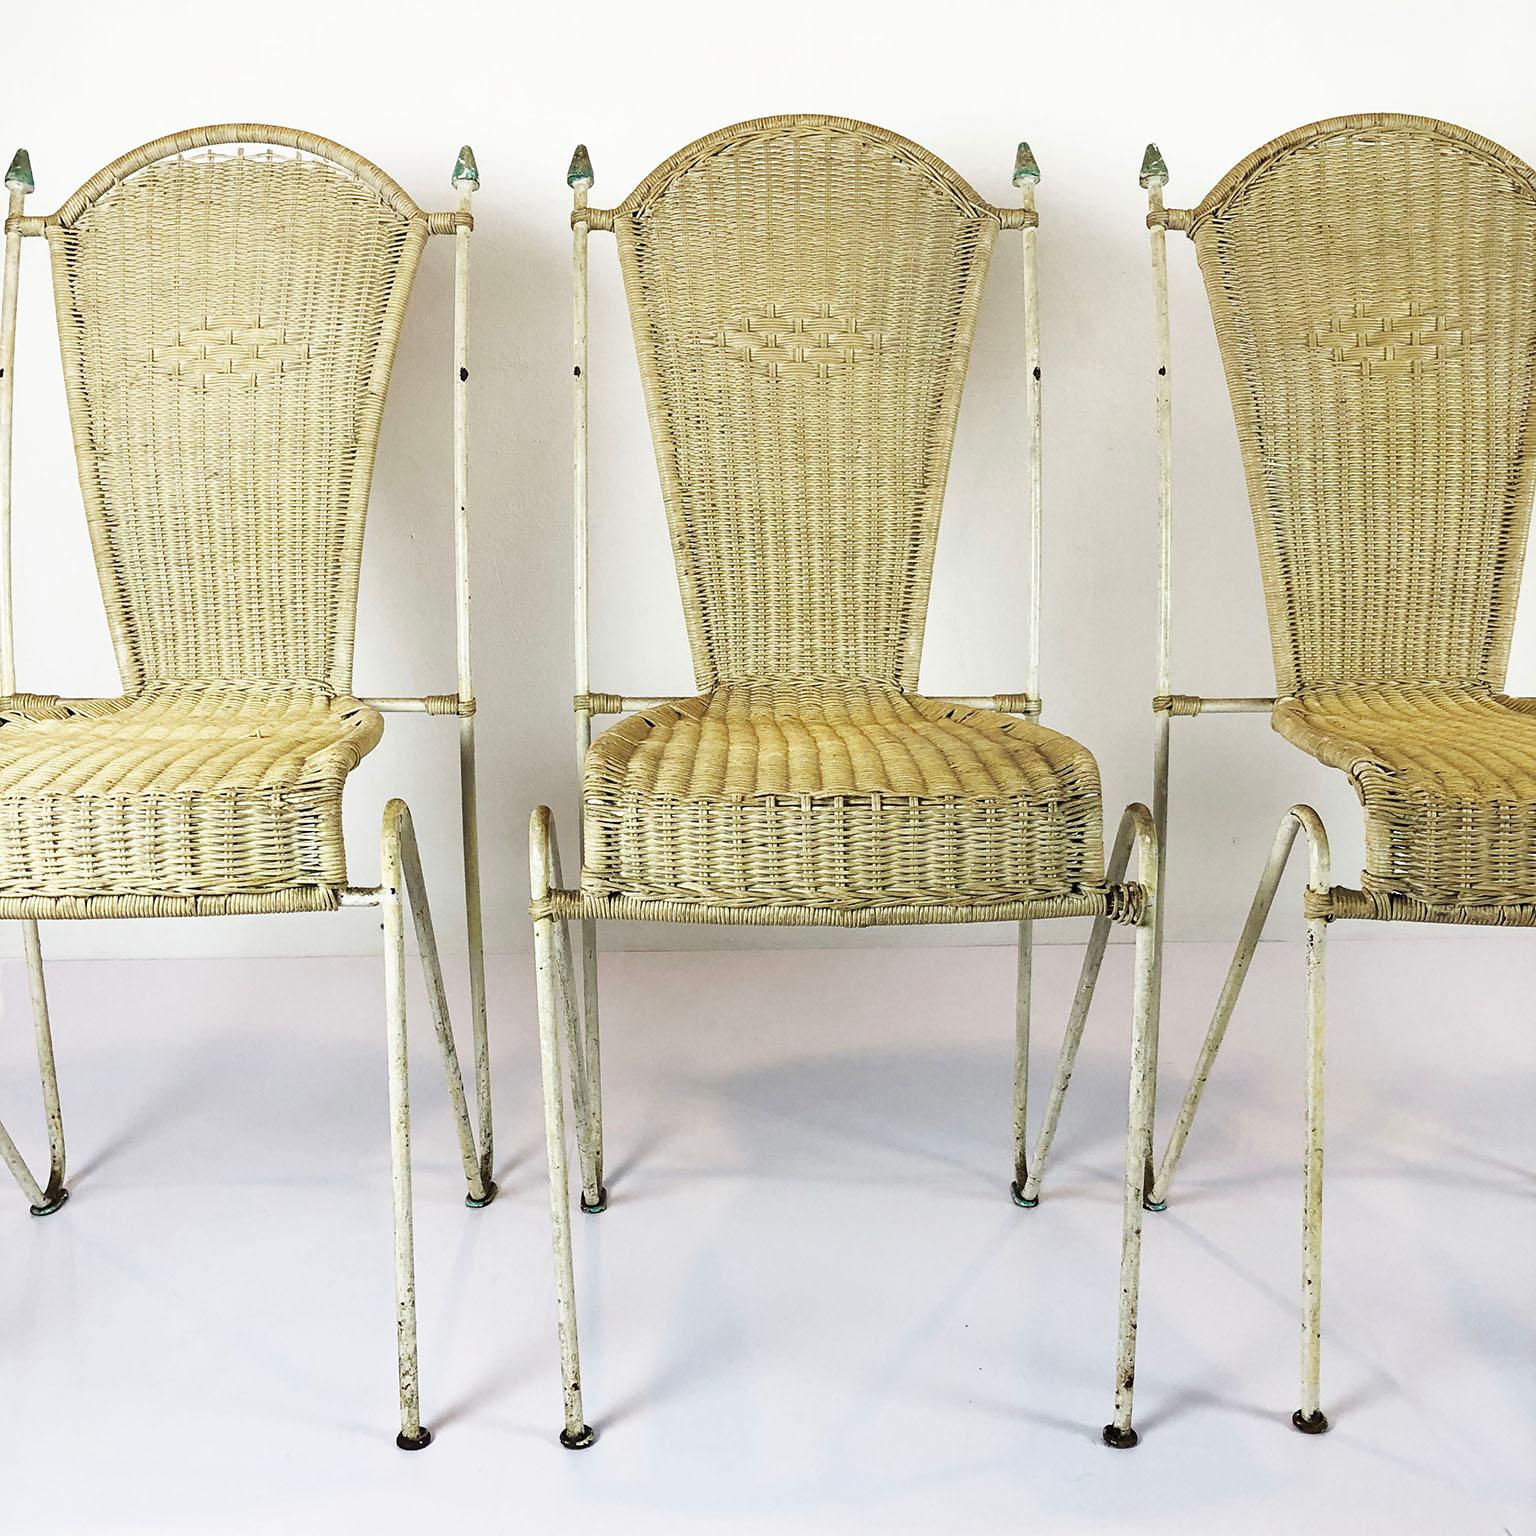 Rare set of four original chairs attributed to Arturo Pani in iron and original rattan, circa 1950.